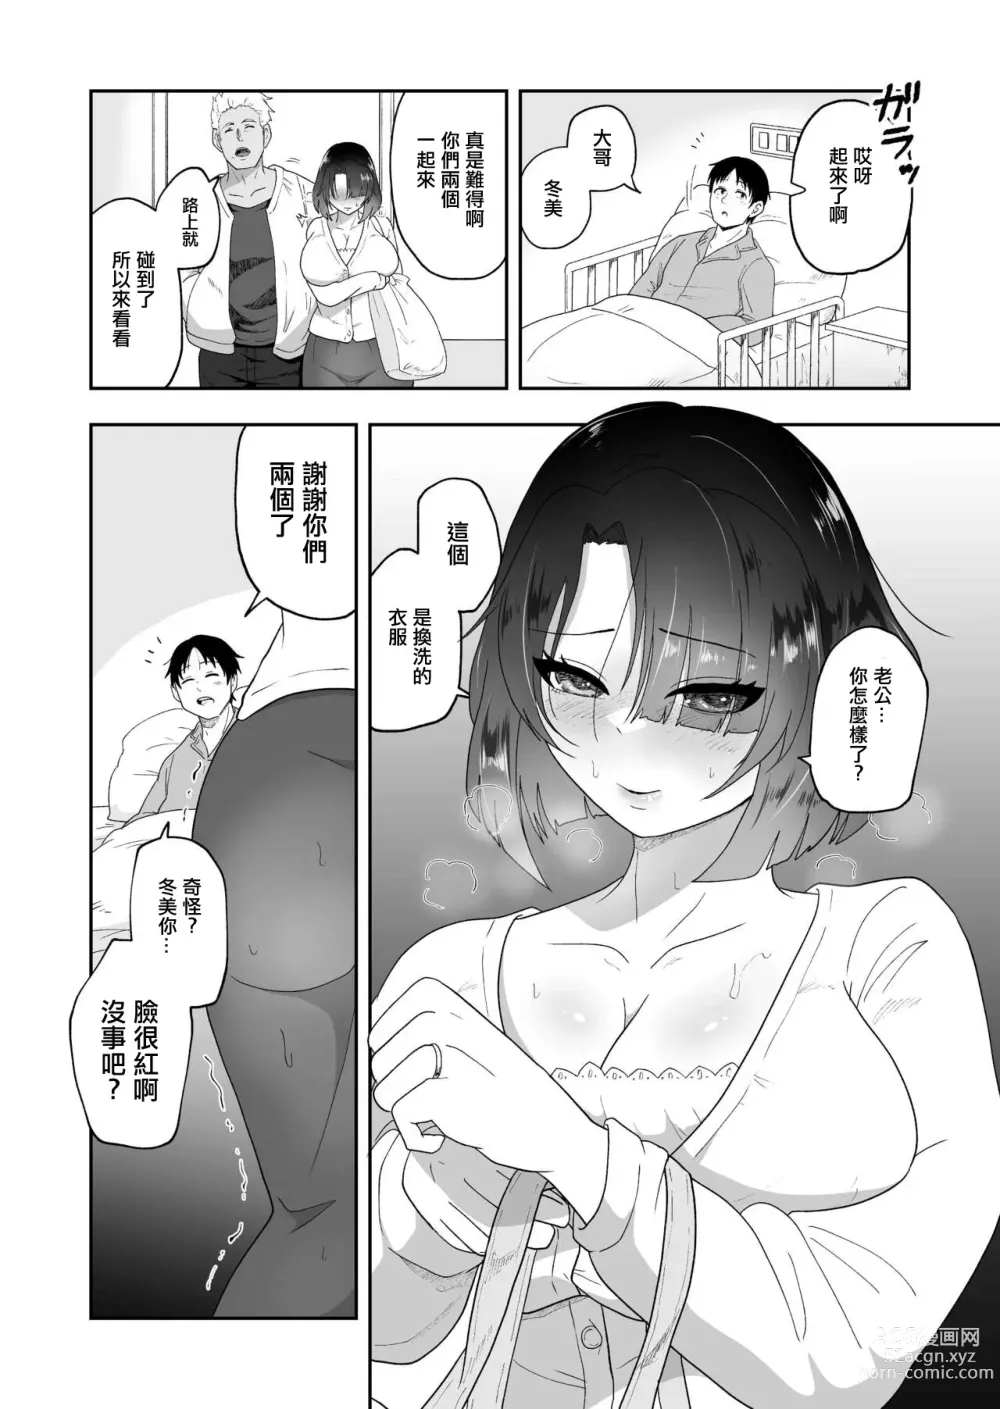 Page 3 of doujinshi 為了丈夫出賣身體的妻子堕落成母狗了